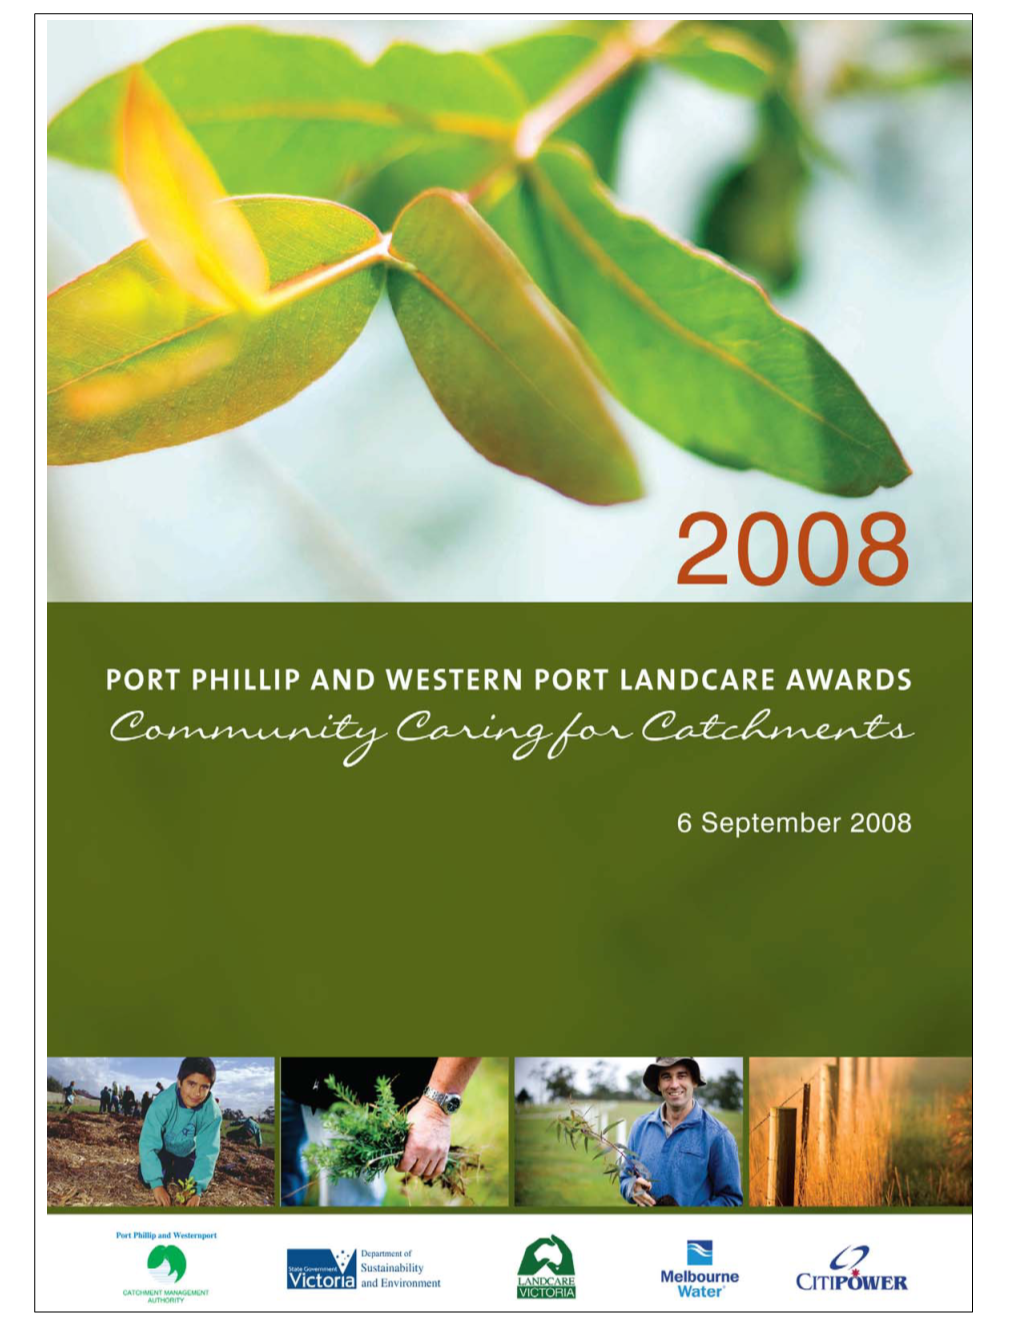 Port Phillip and Western Port Landcare Awards